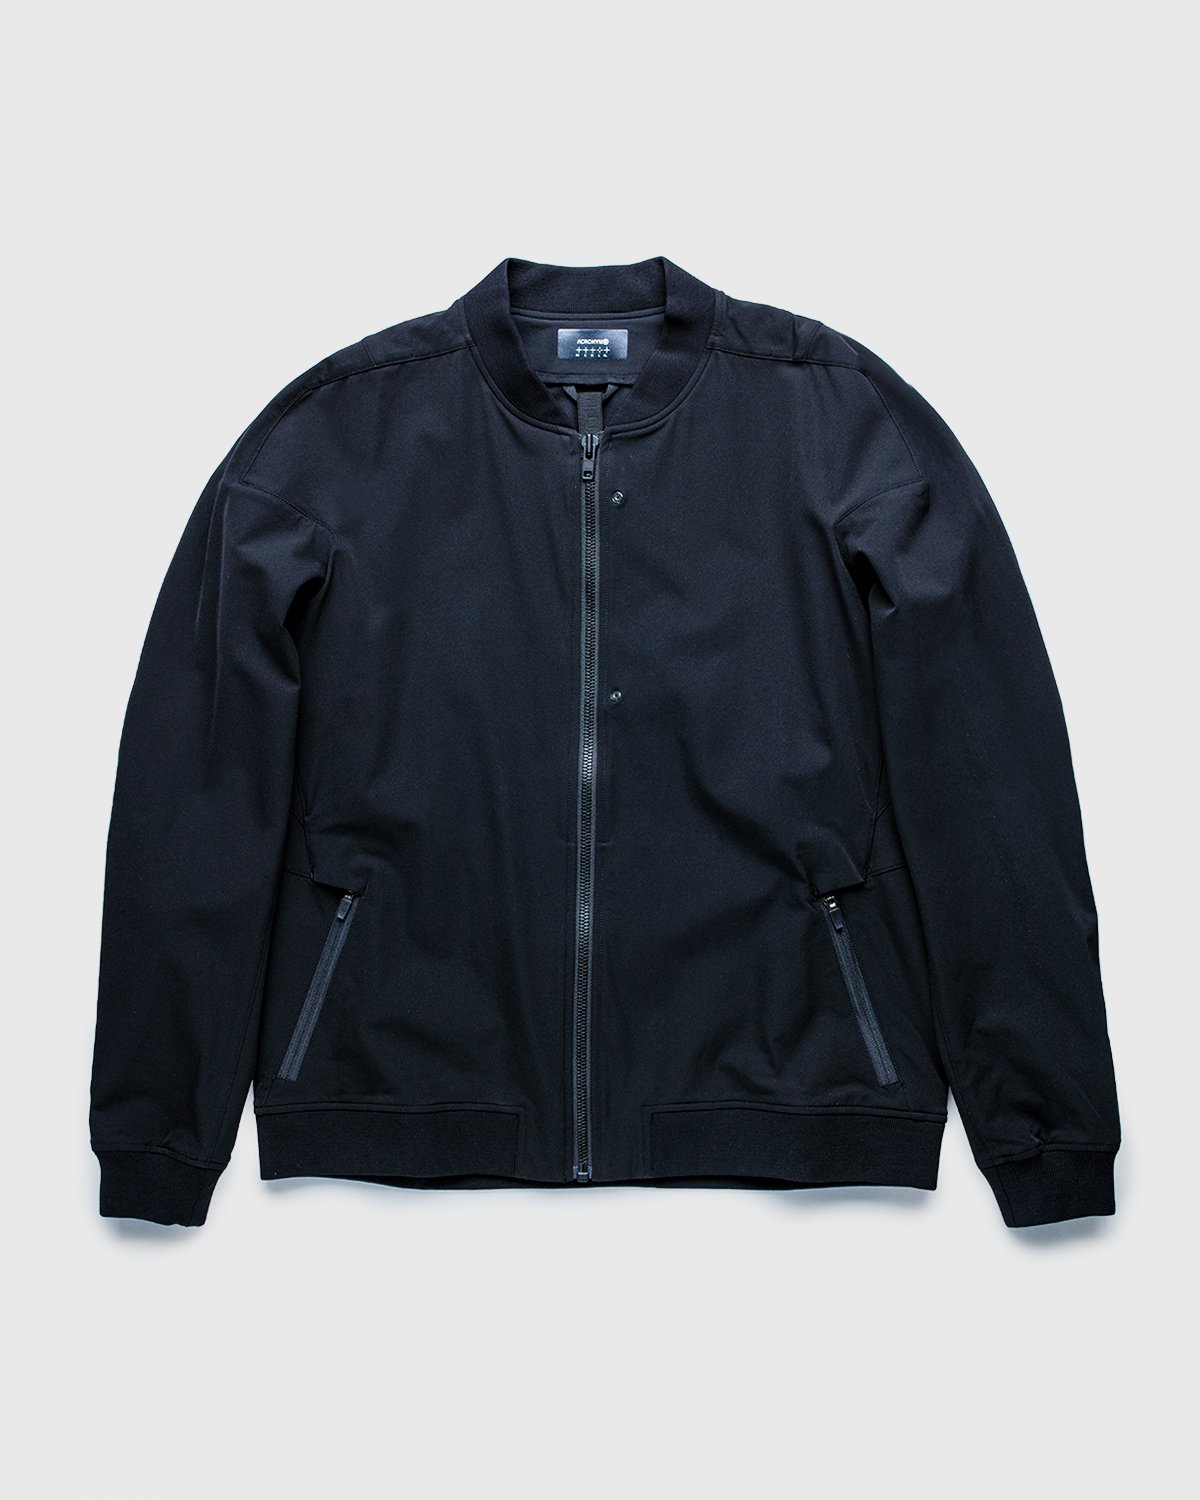 ACRONYM – J90-DS Jacket Black | Highsnobiety Shop